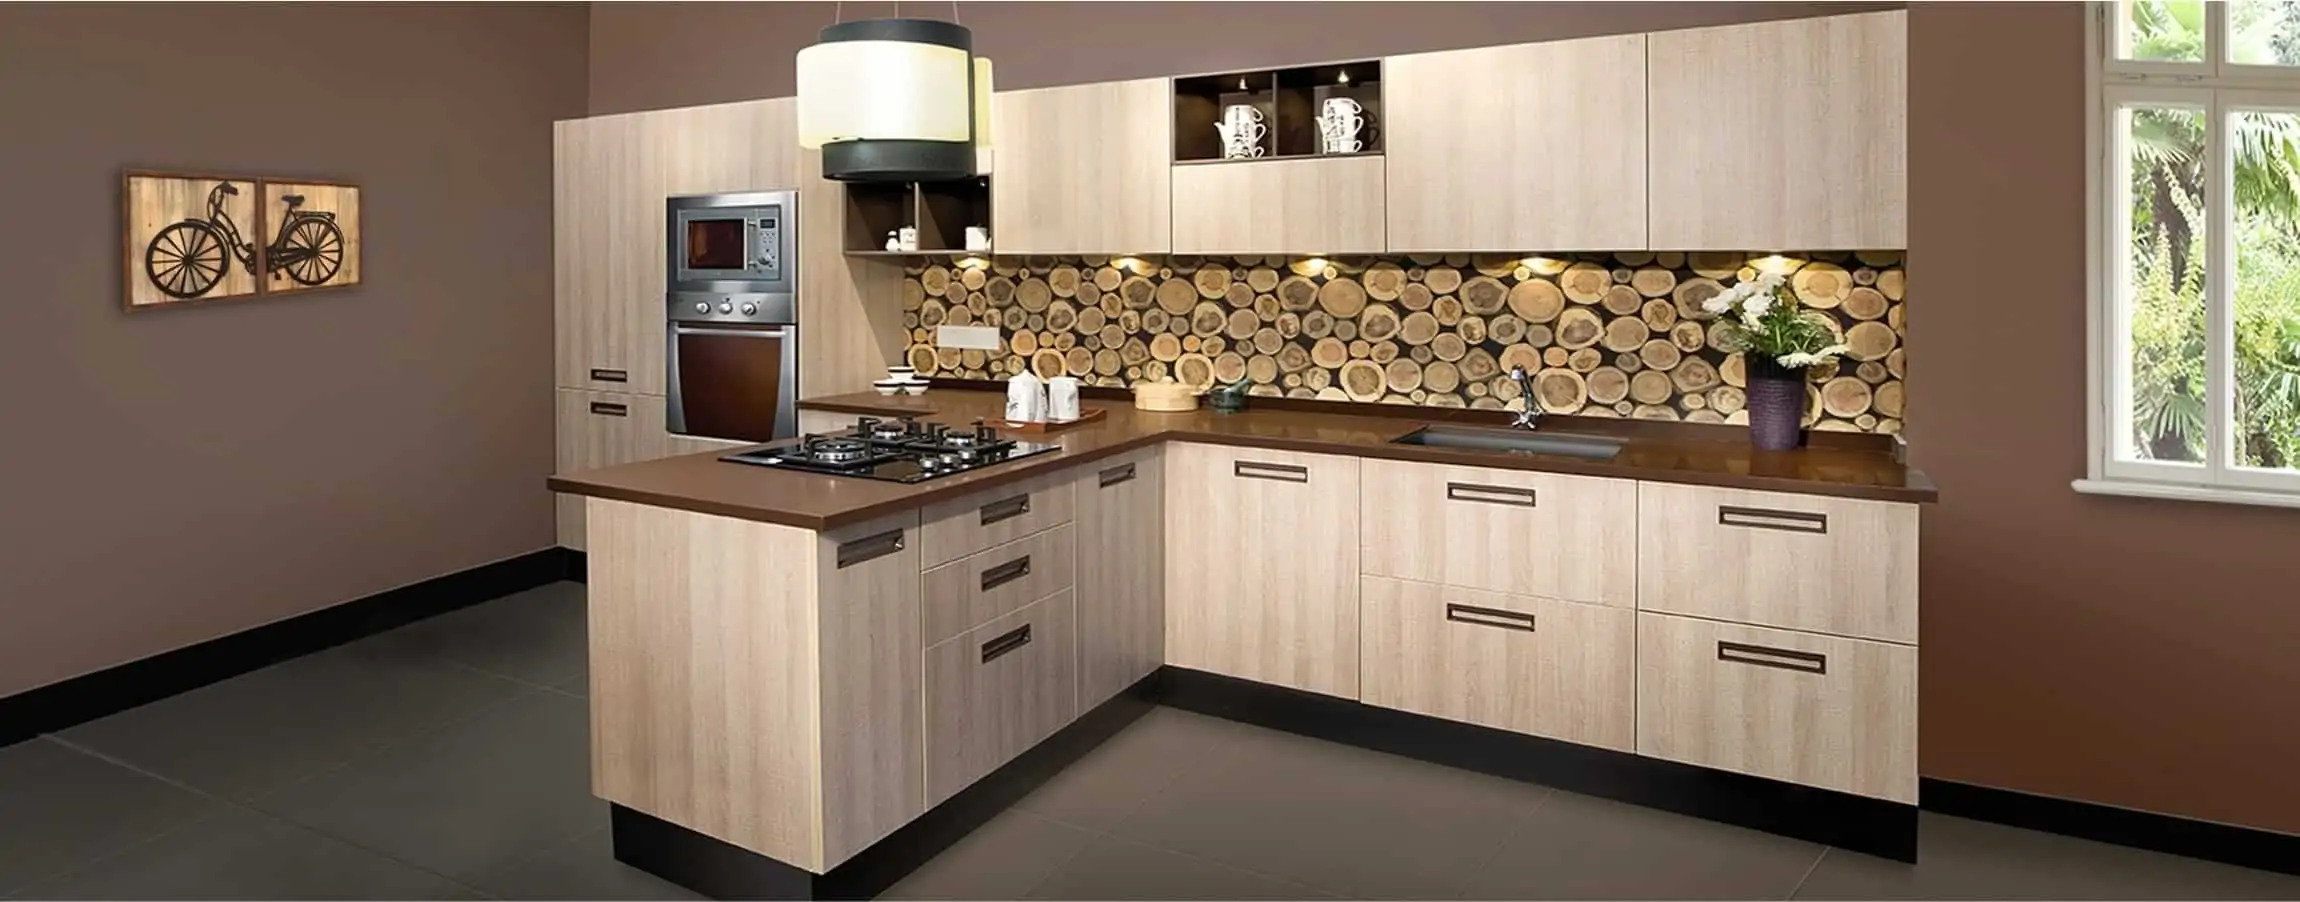 Sleek Bling modular kitchens L shape design & cabinet materials at project price